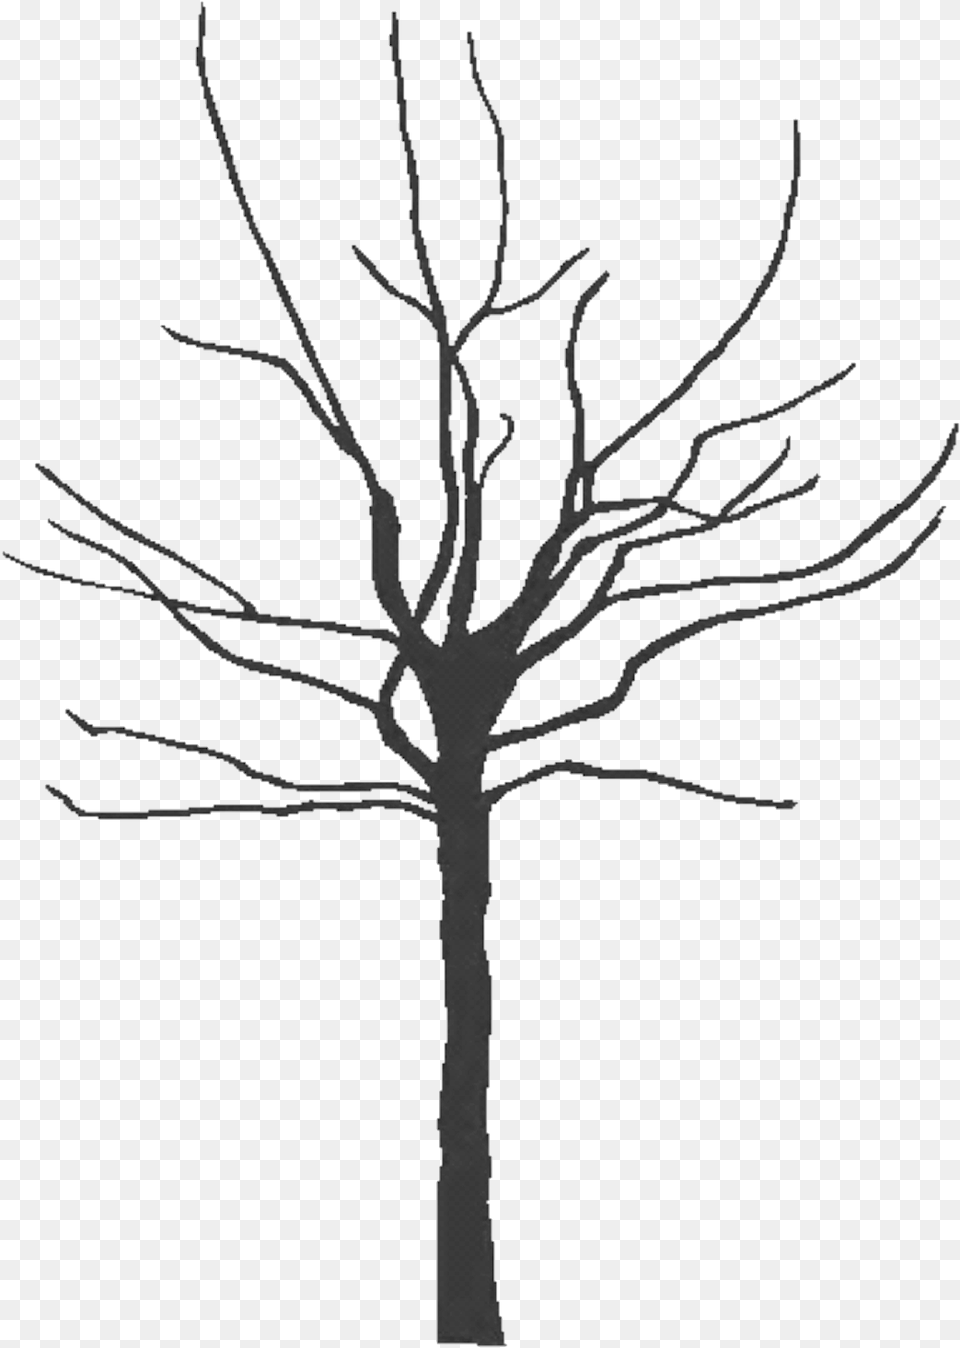 Com Tree Black 300dpi Copy Pluspng Tree Trunk Silhouette, Plant, Art, Drawing, Chandelier Free Png